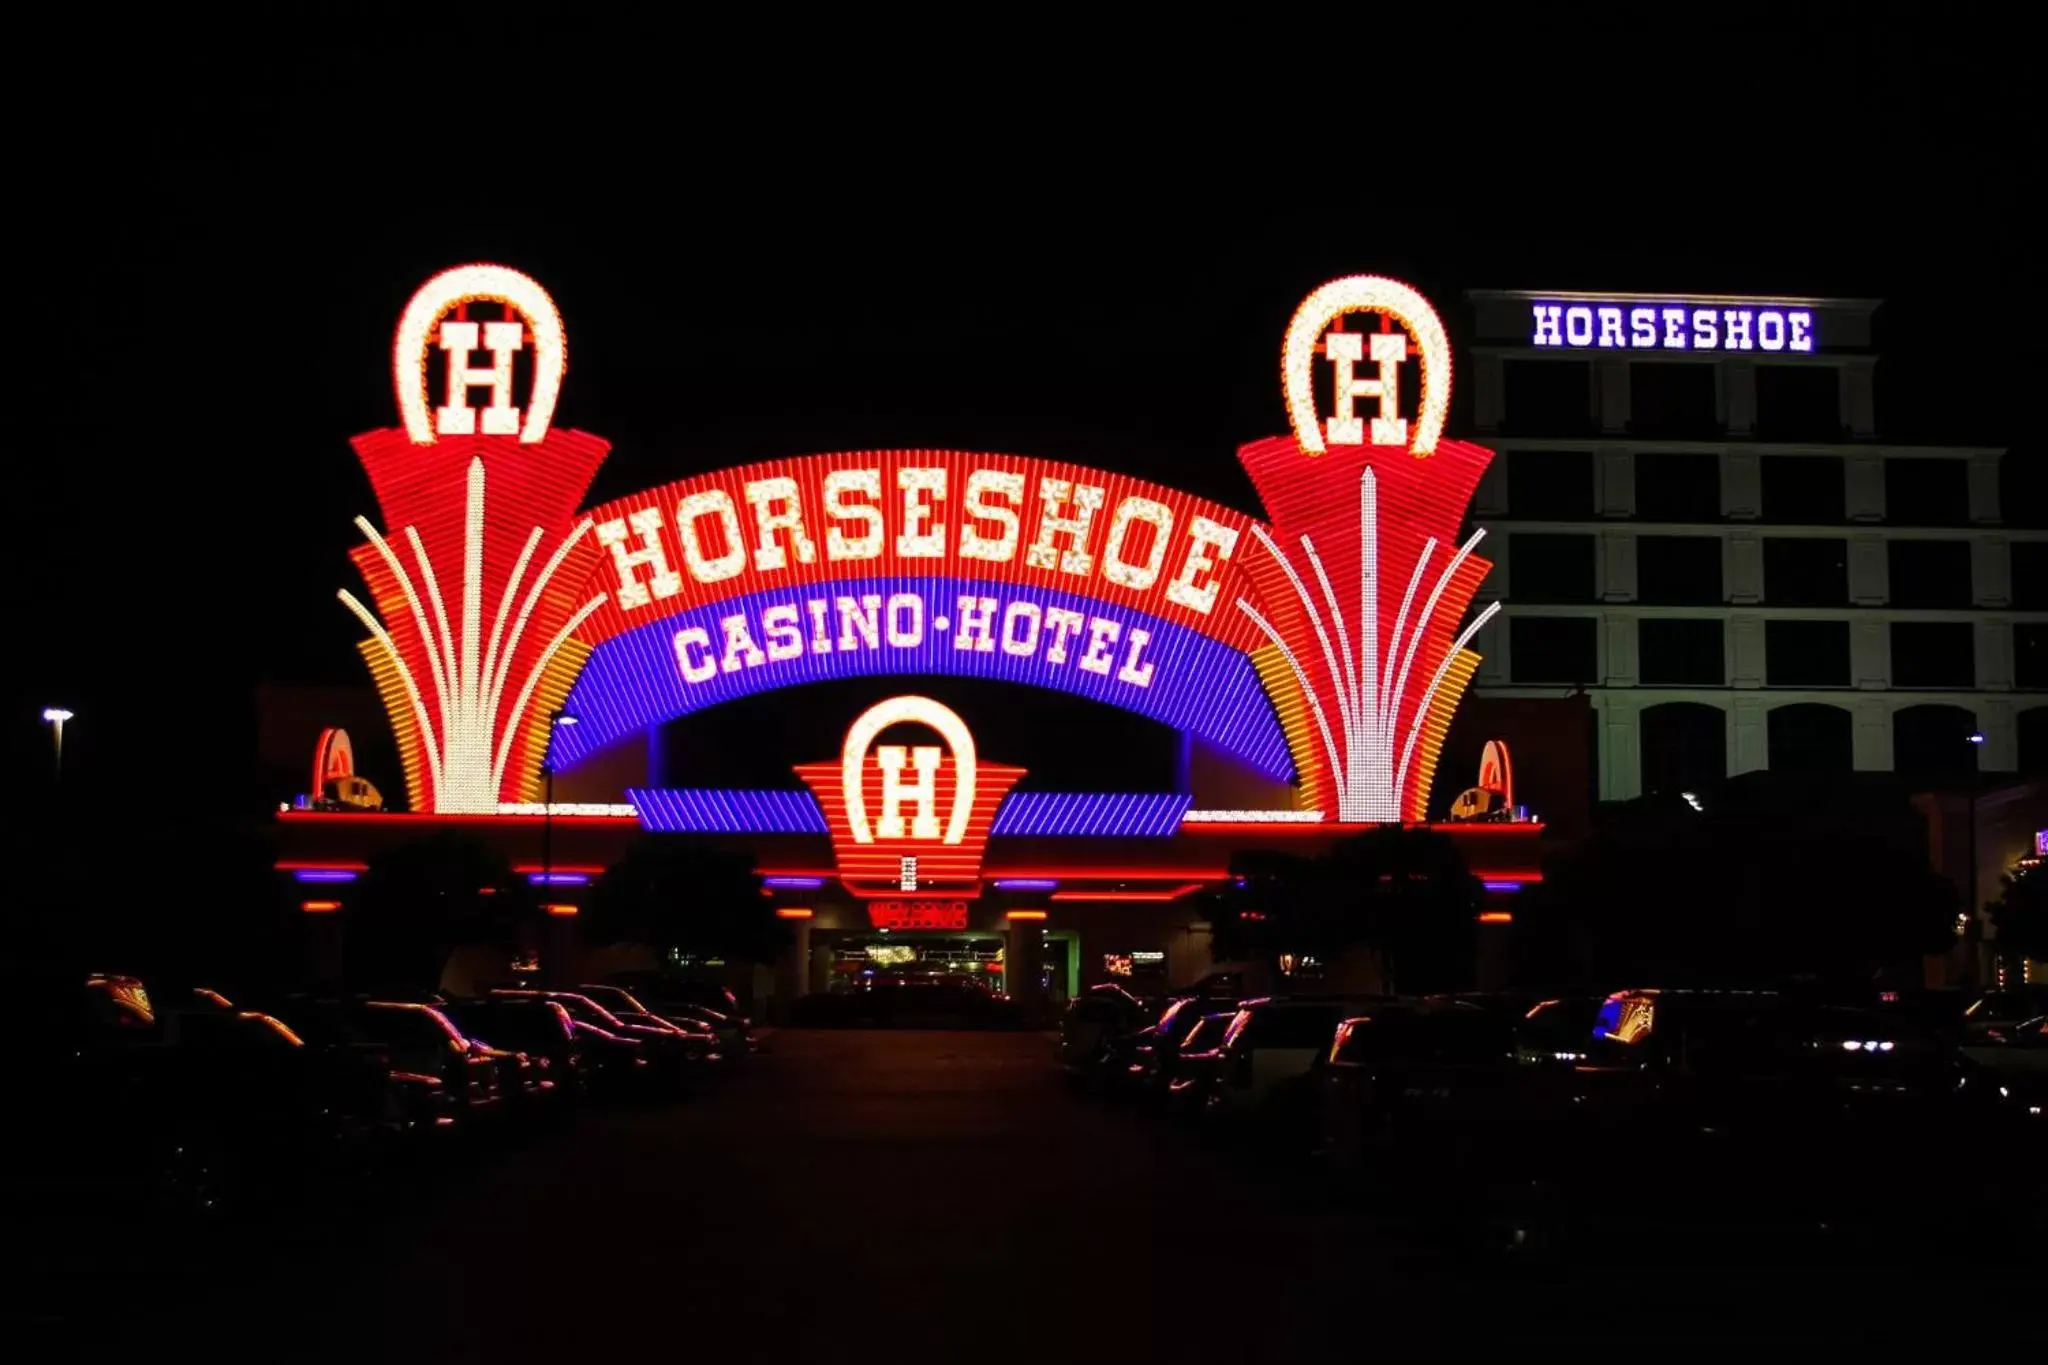 Facade/entrance in Horseshoe Tunica Casino & Hotel